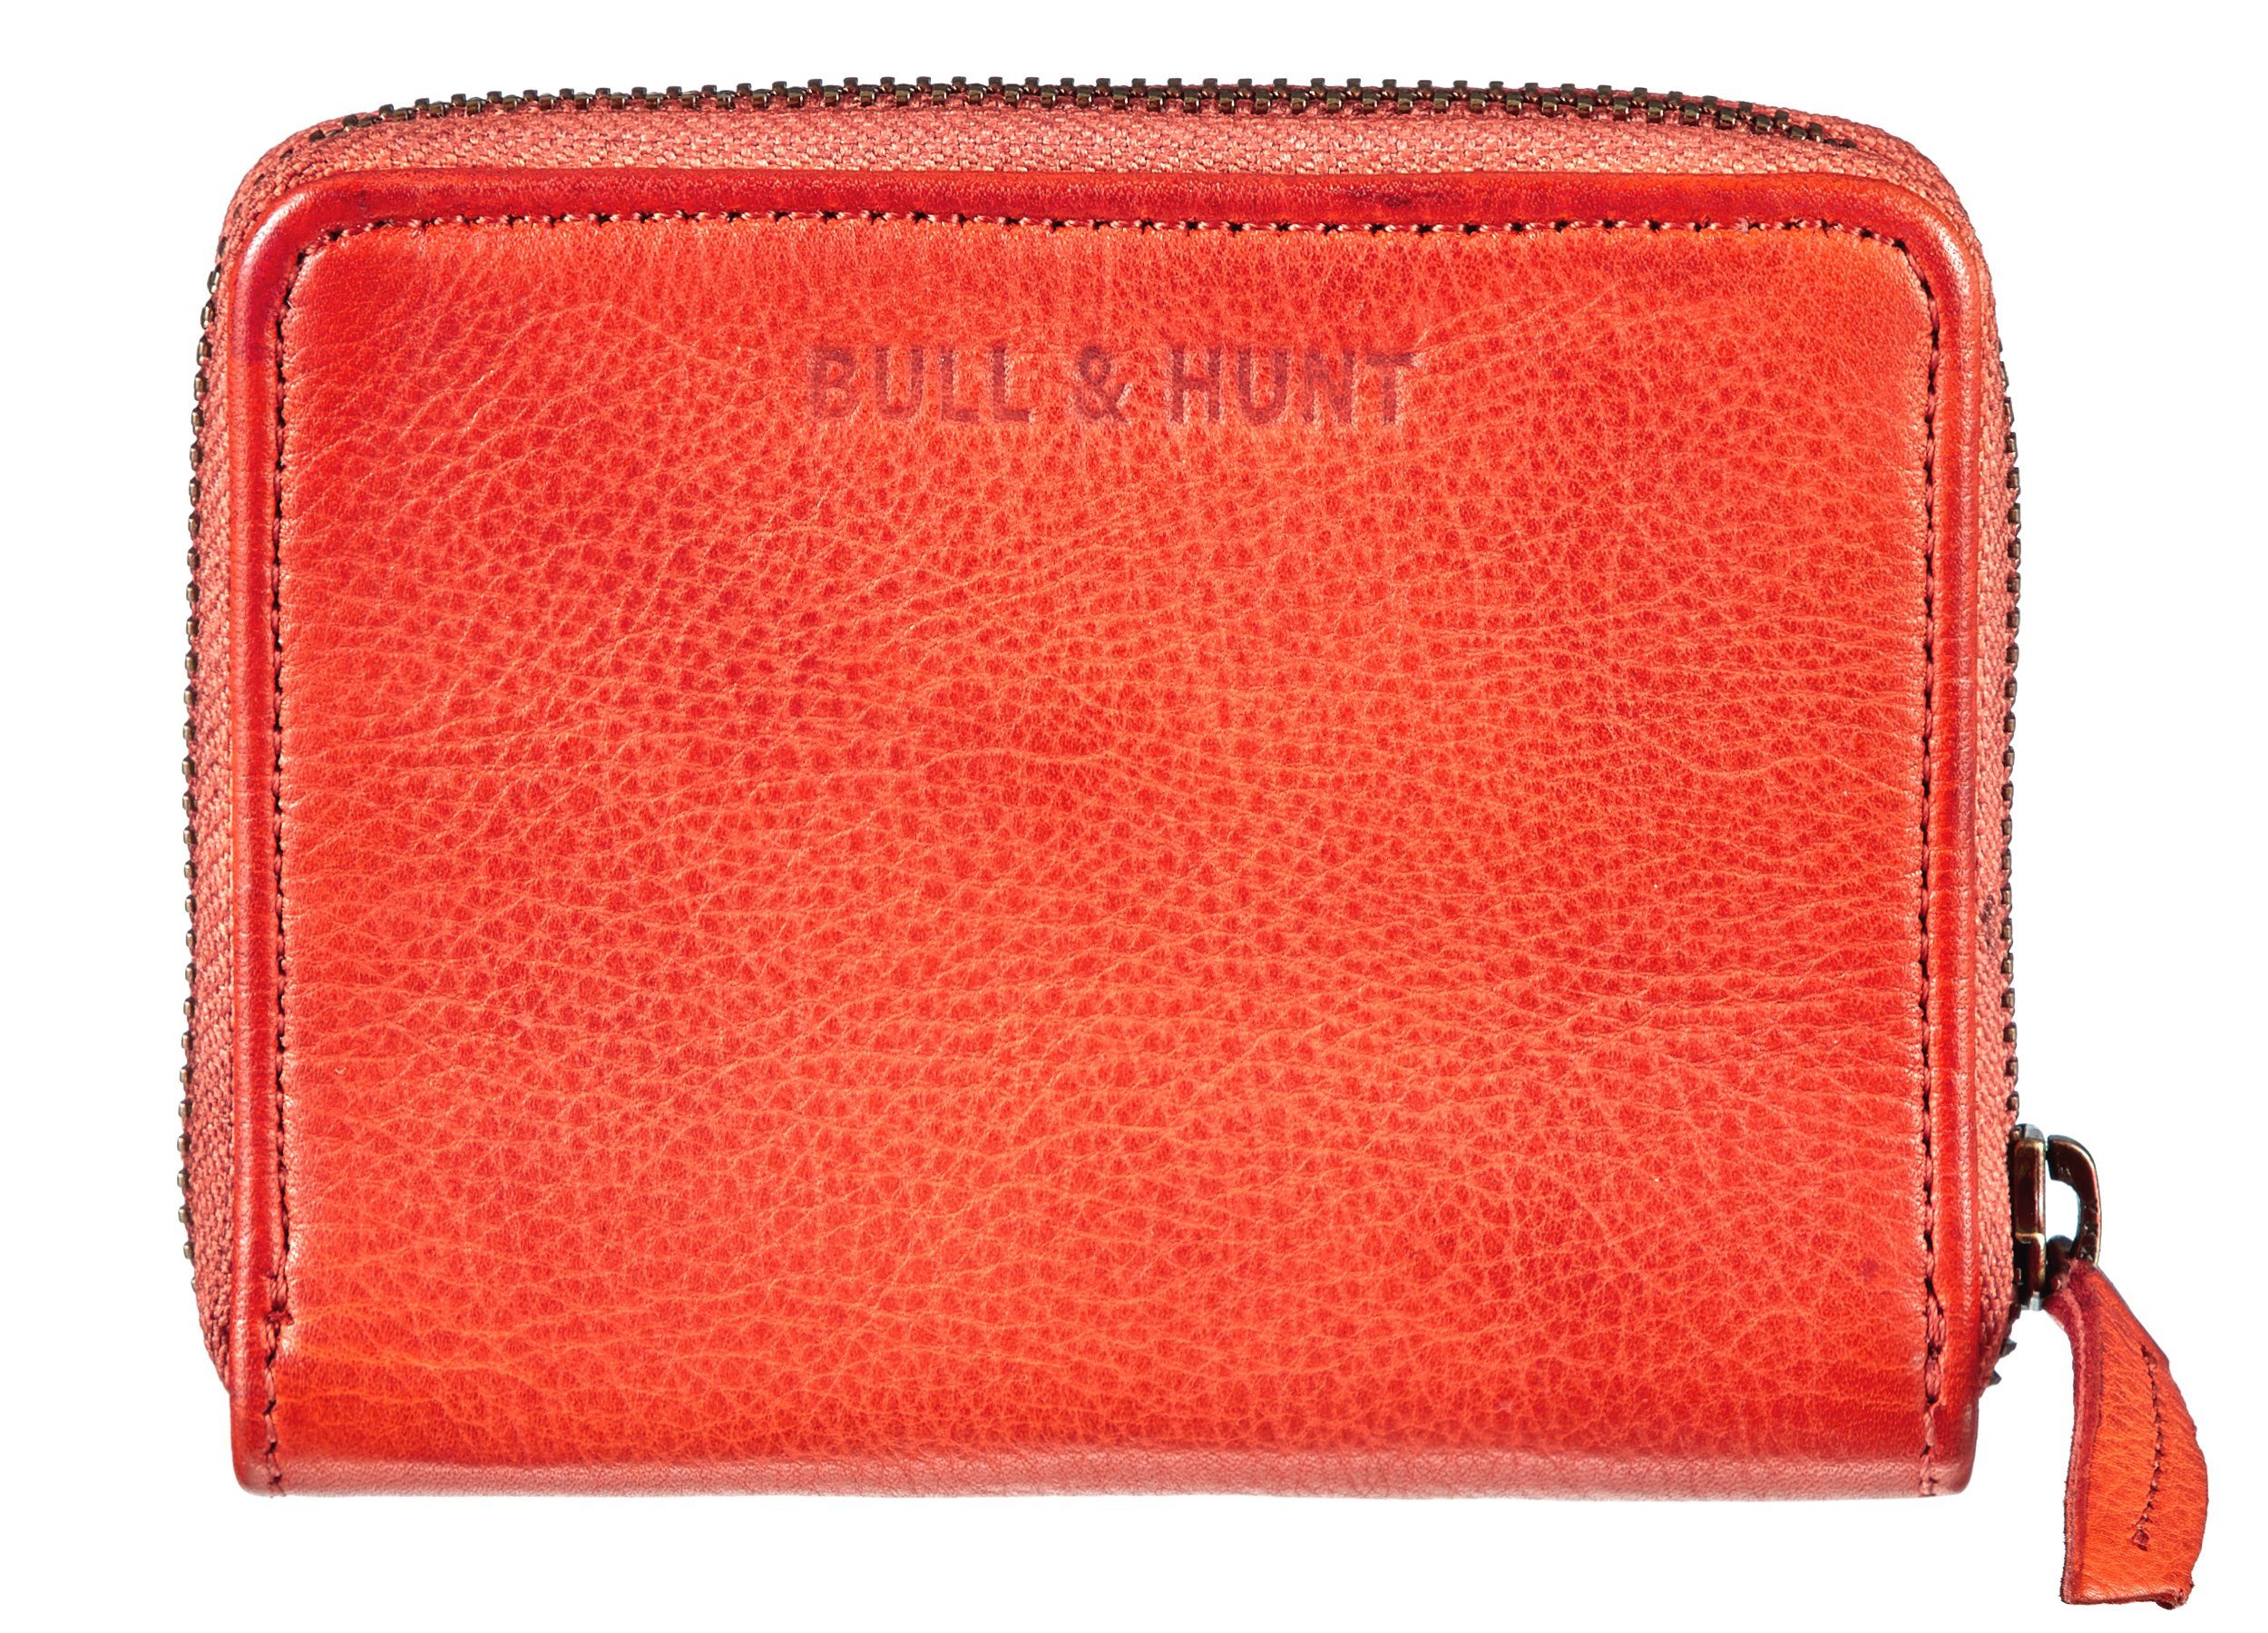 Bull & Hunt Geldbörse midi zip wallet orange